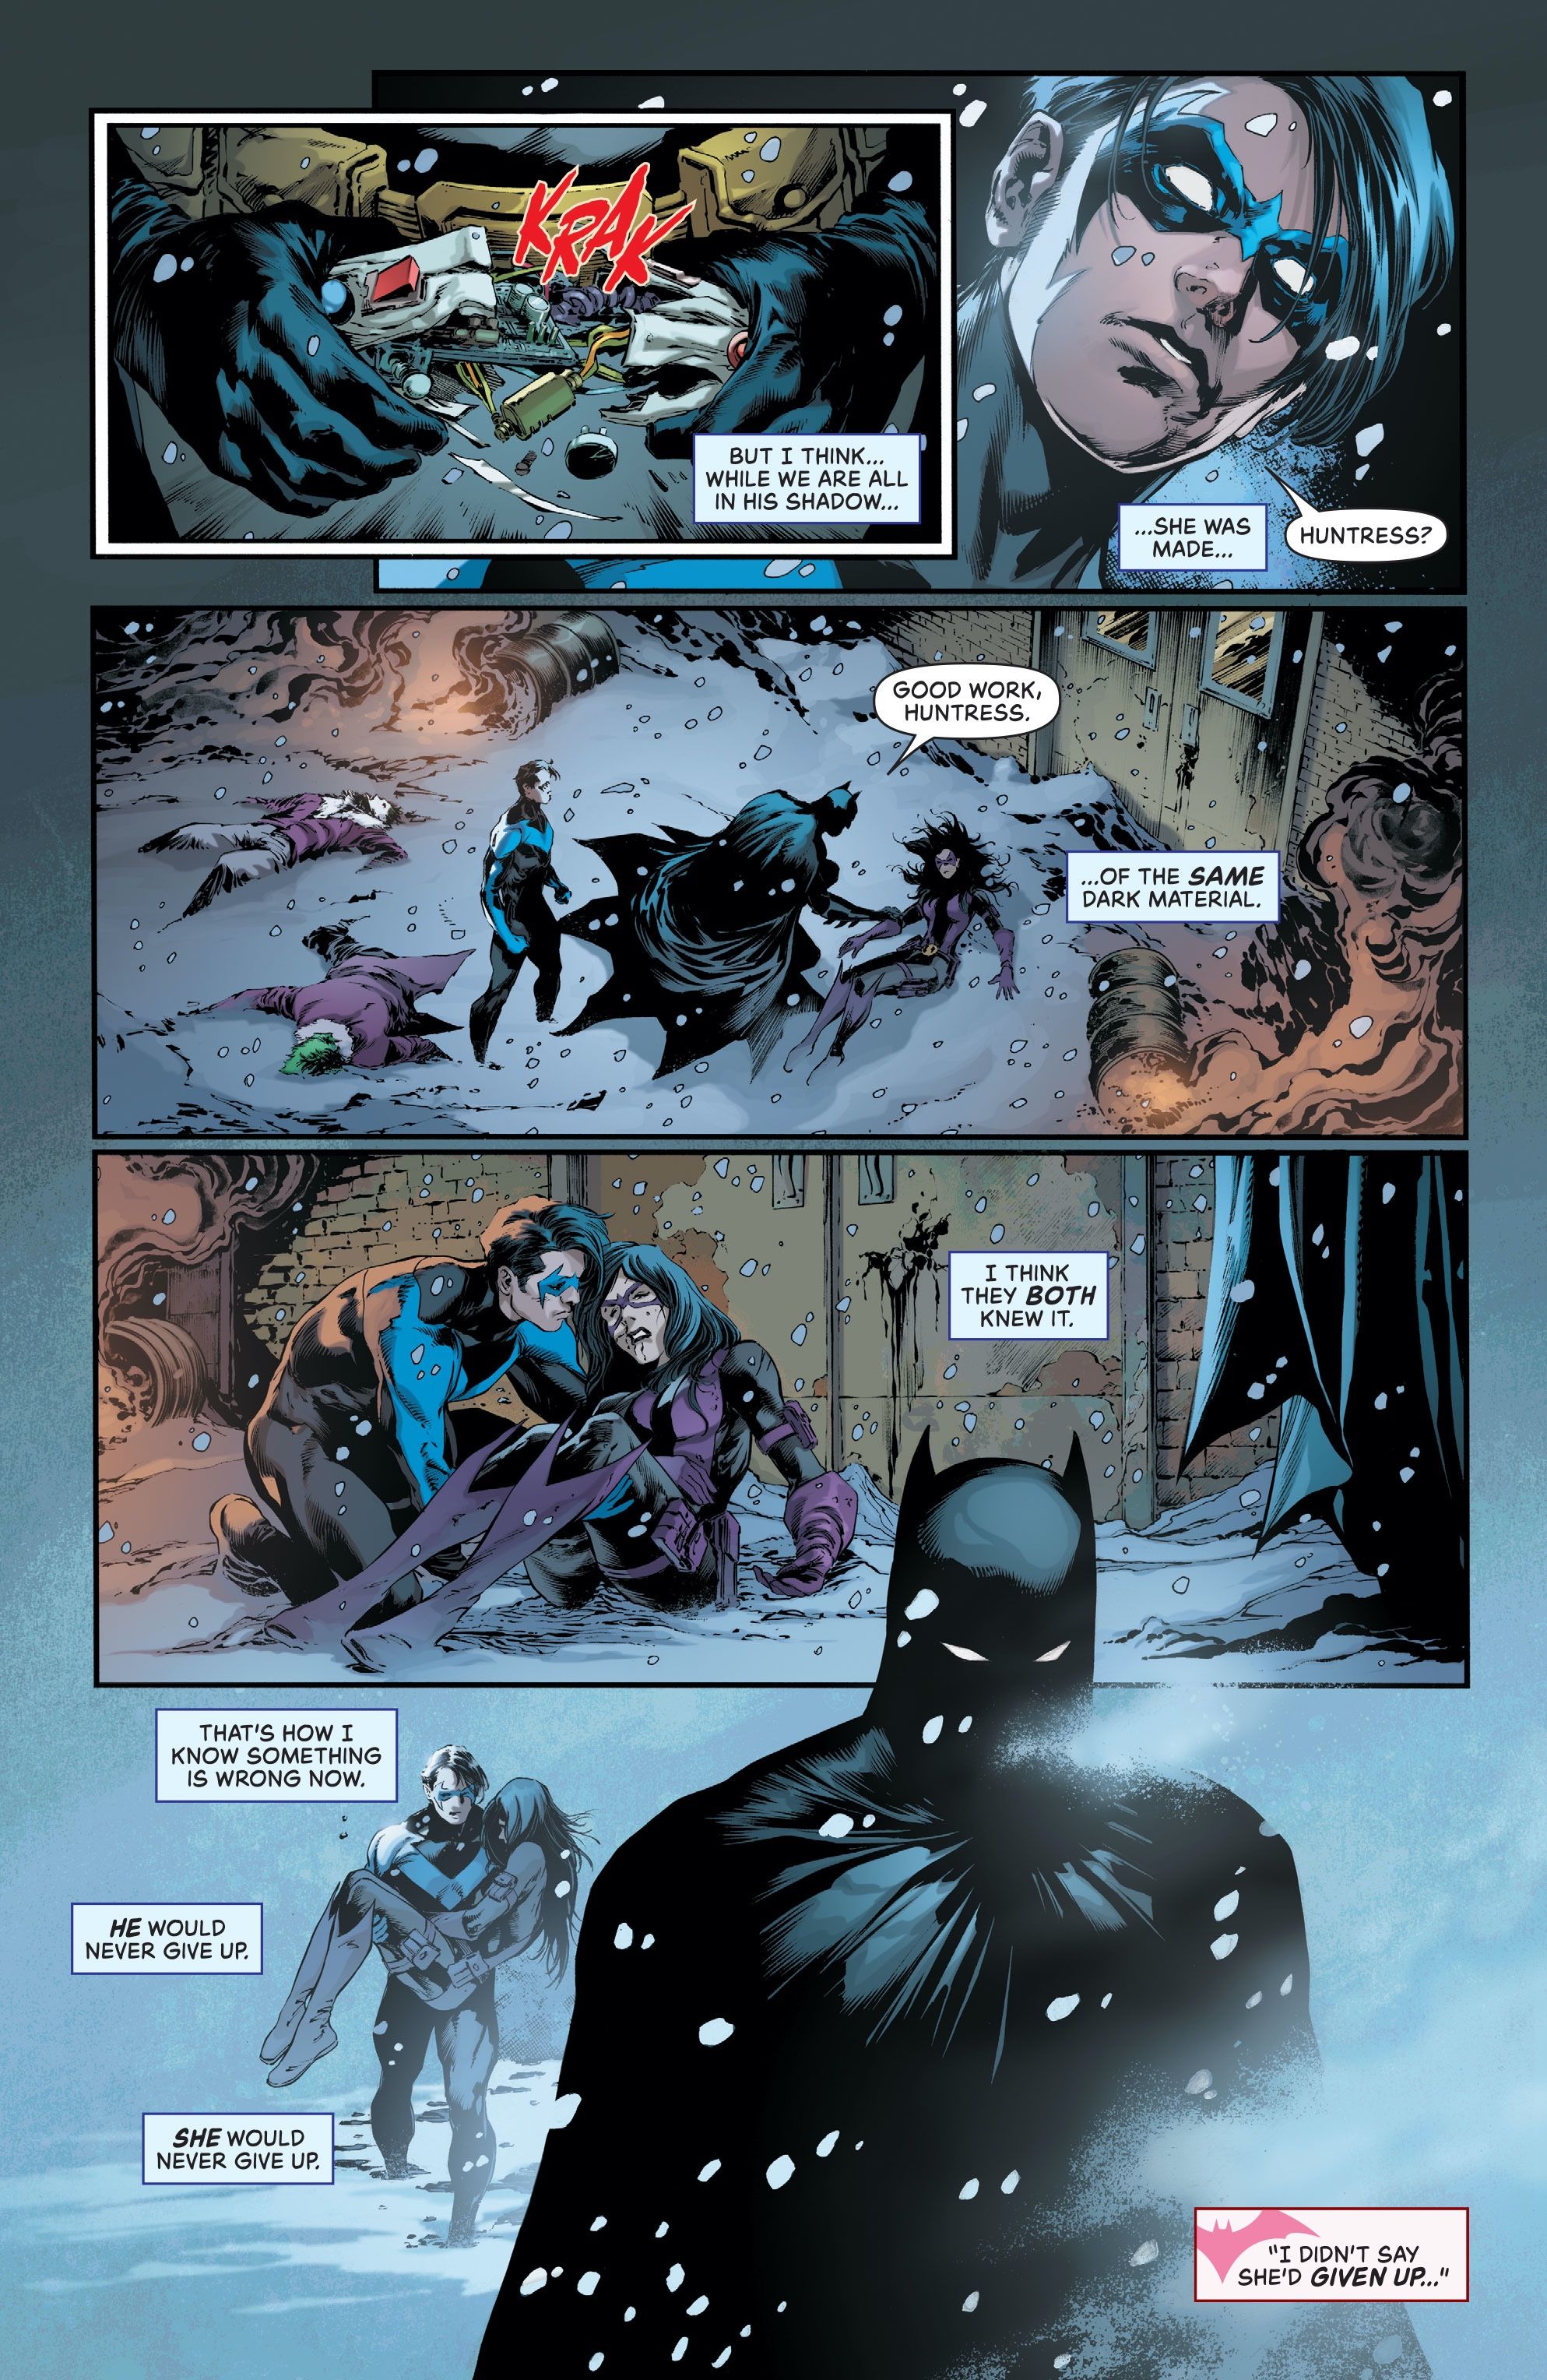 Detective Comics 1050 preview page